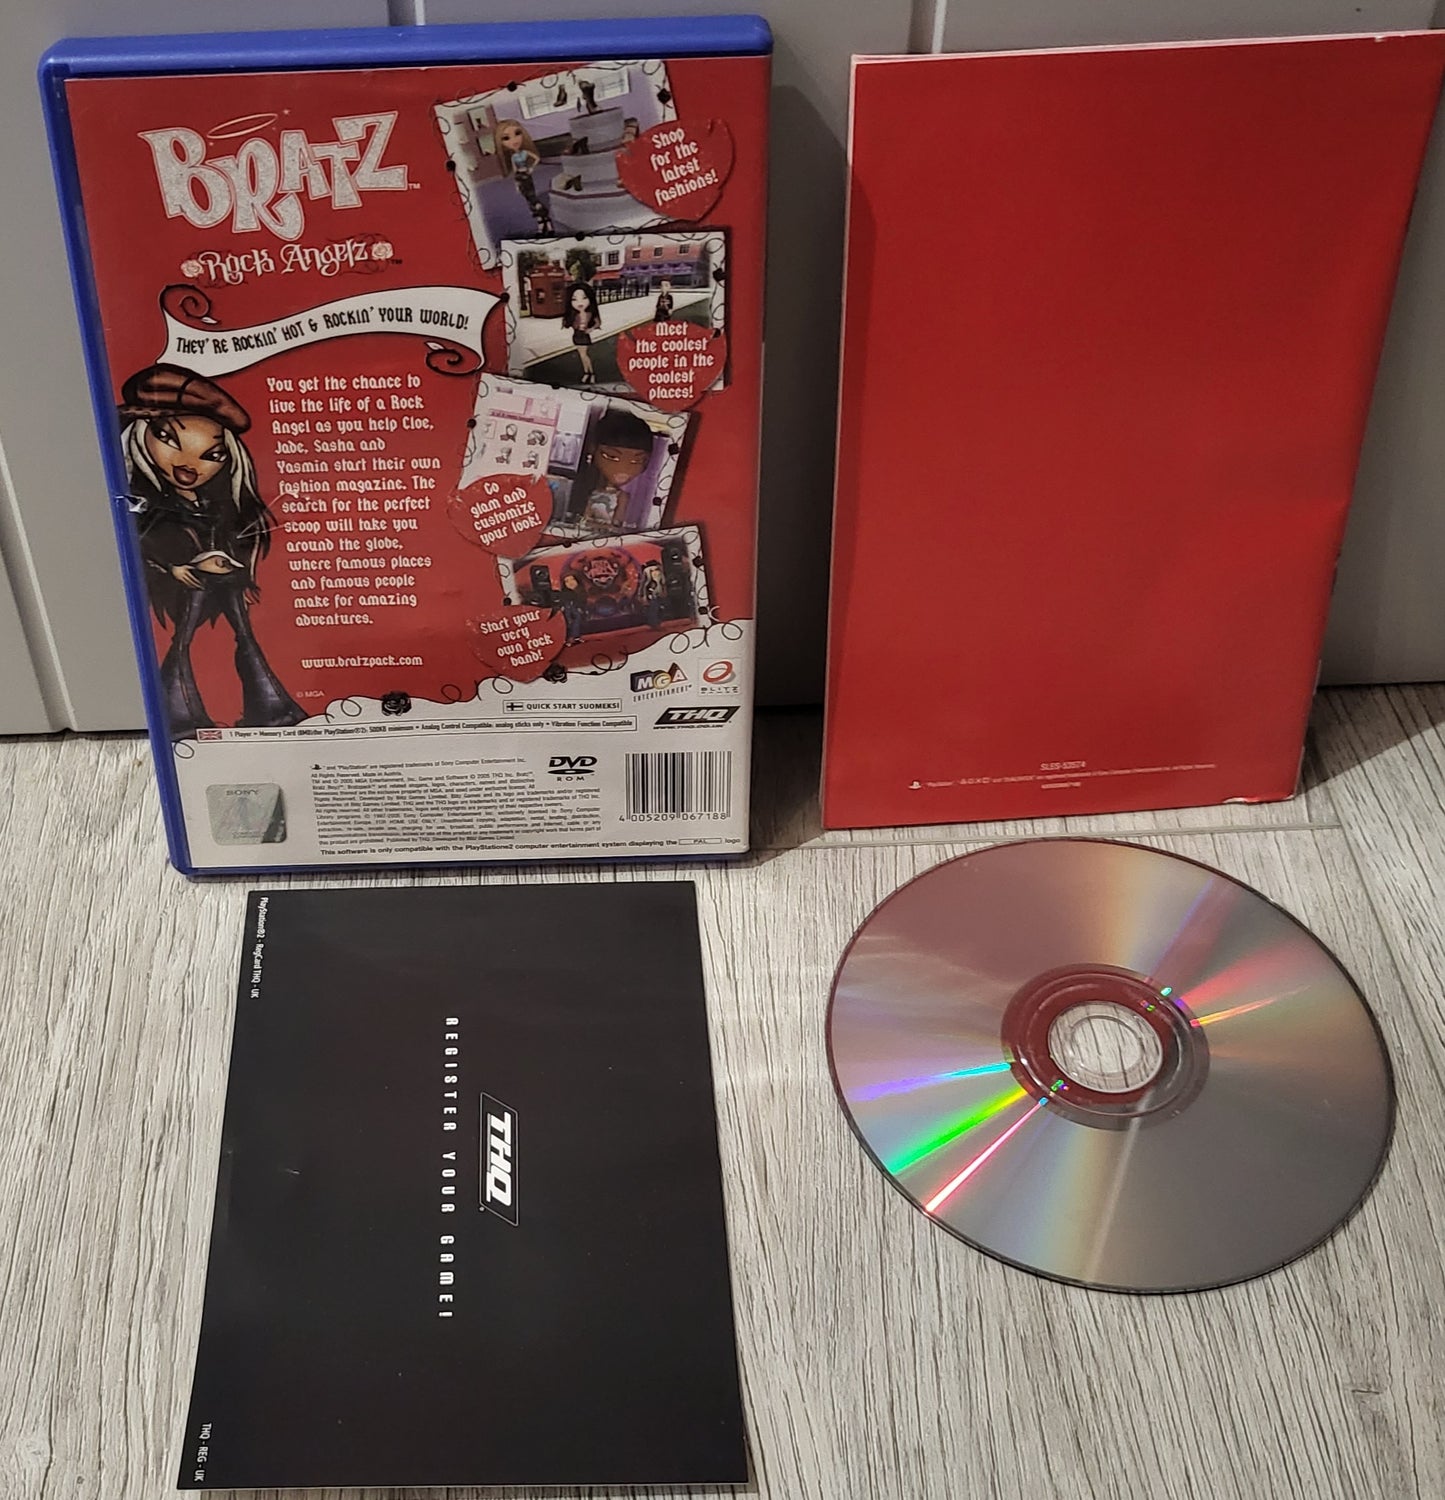 Bratz Rock Angelz Sony Playstation 2 (PS2) Game